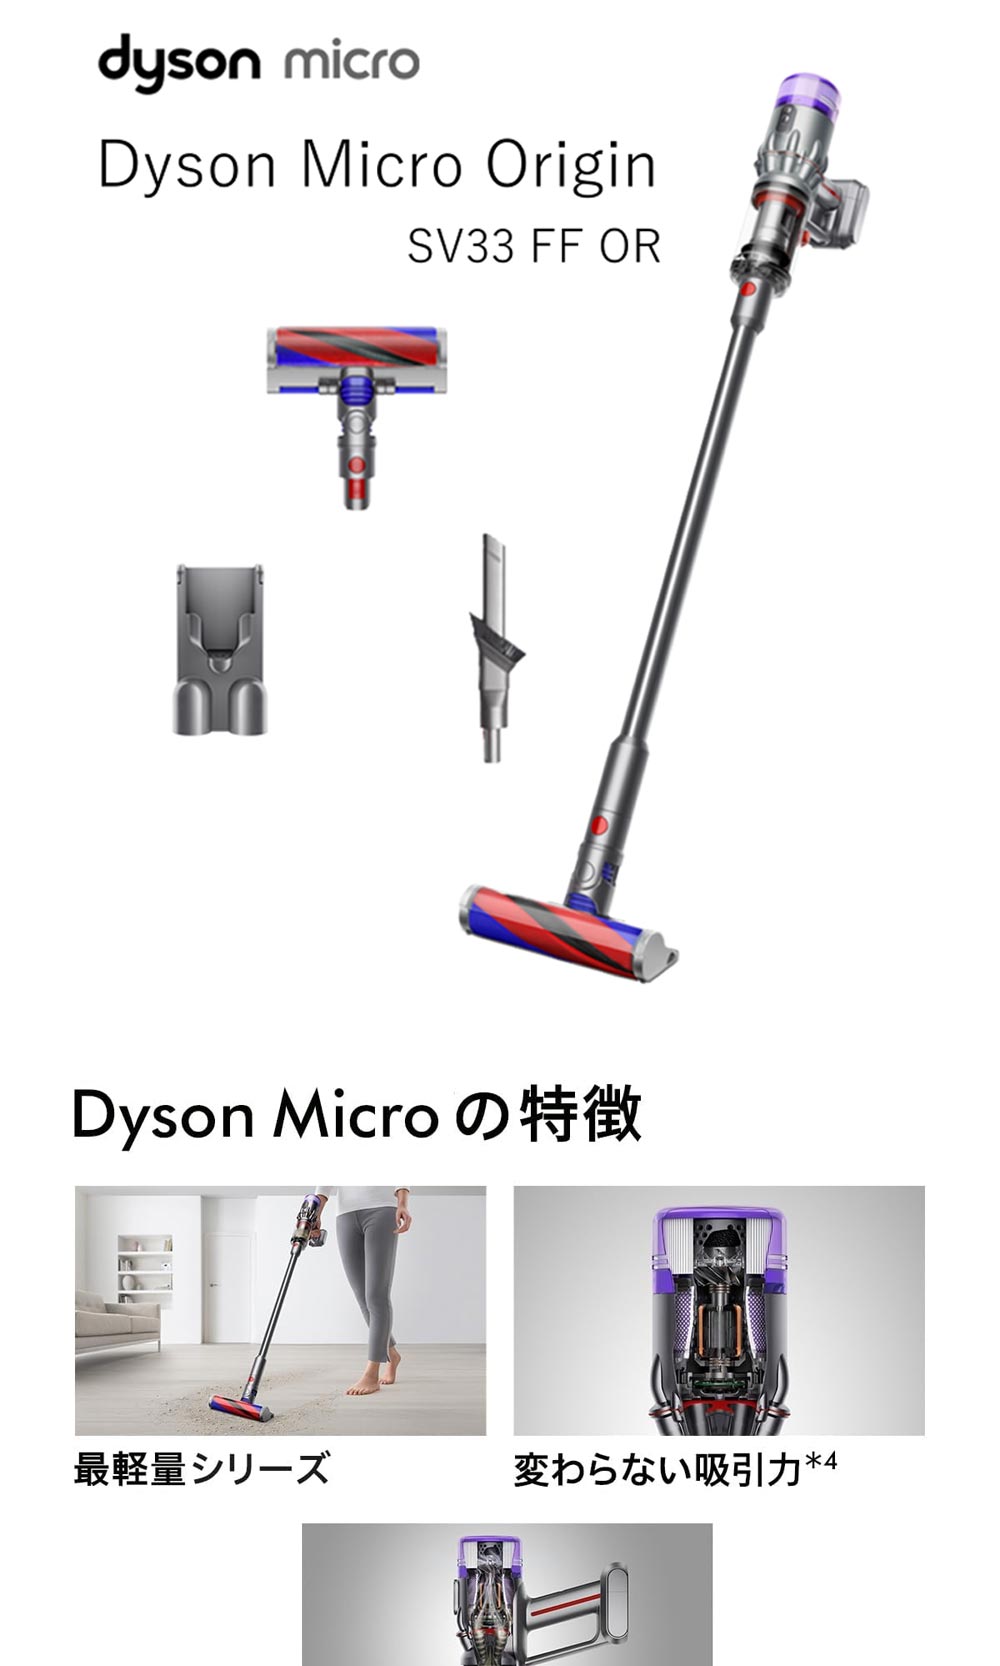 DYSON SV33 FF OR シルバー/アイアン/ニッケル Micro Origin ...